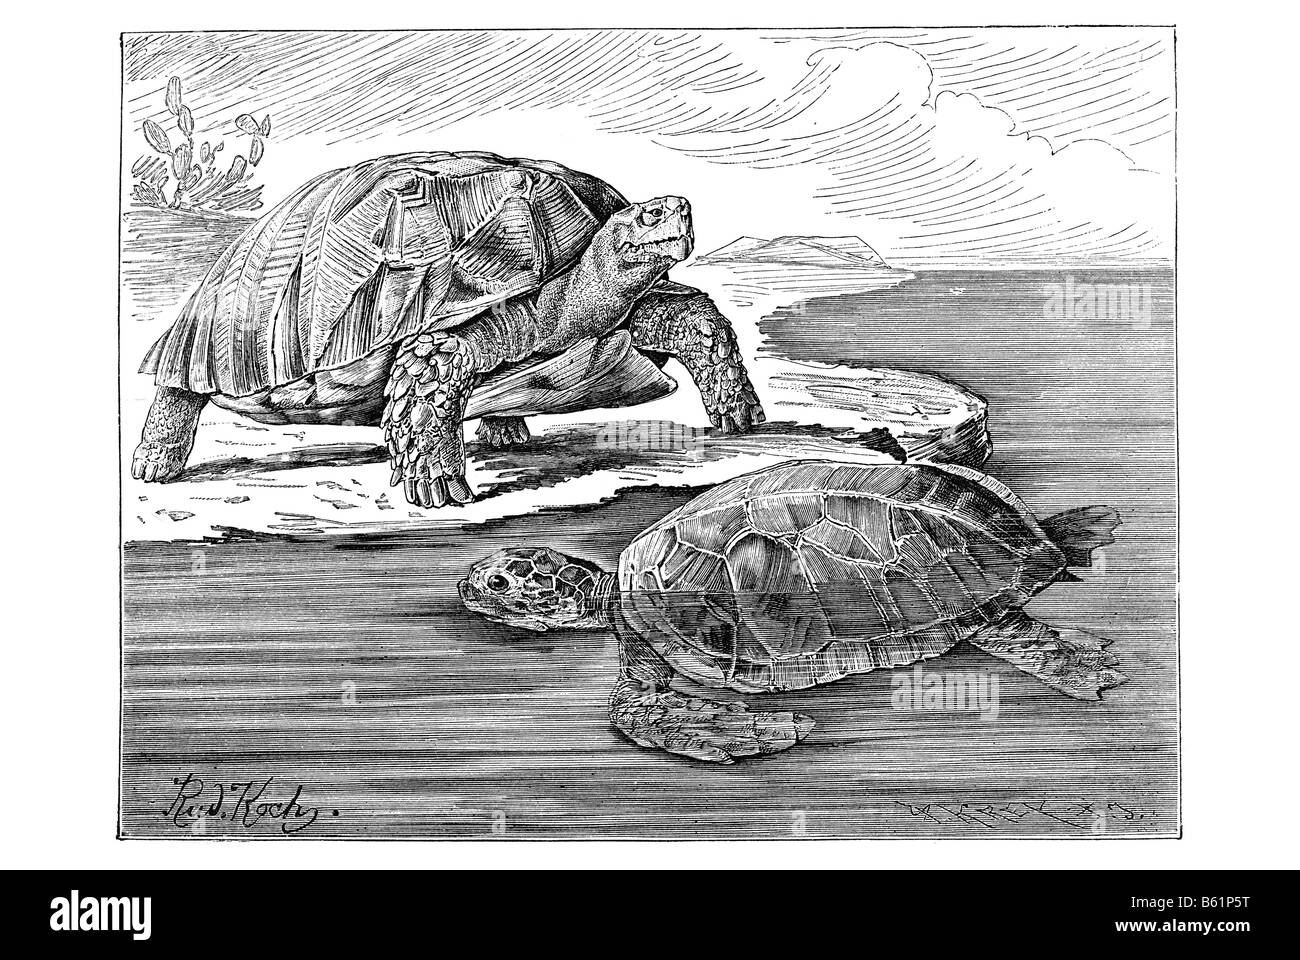 Le tartarughe marine, tartarughe o tartarughe terrestri Foto Stock